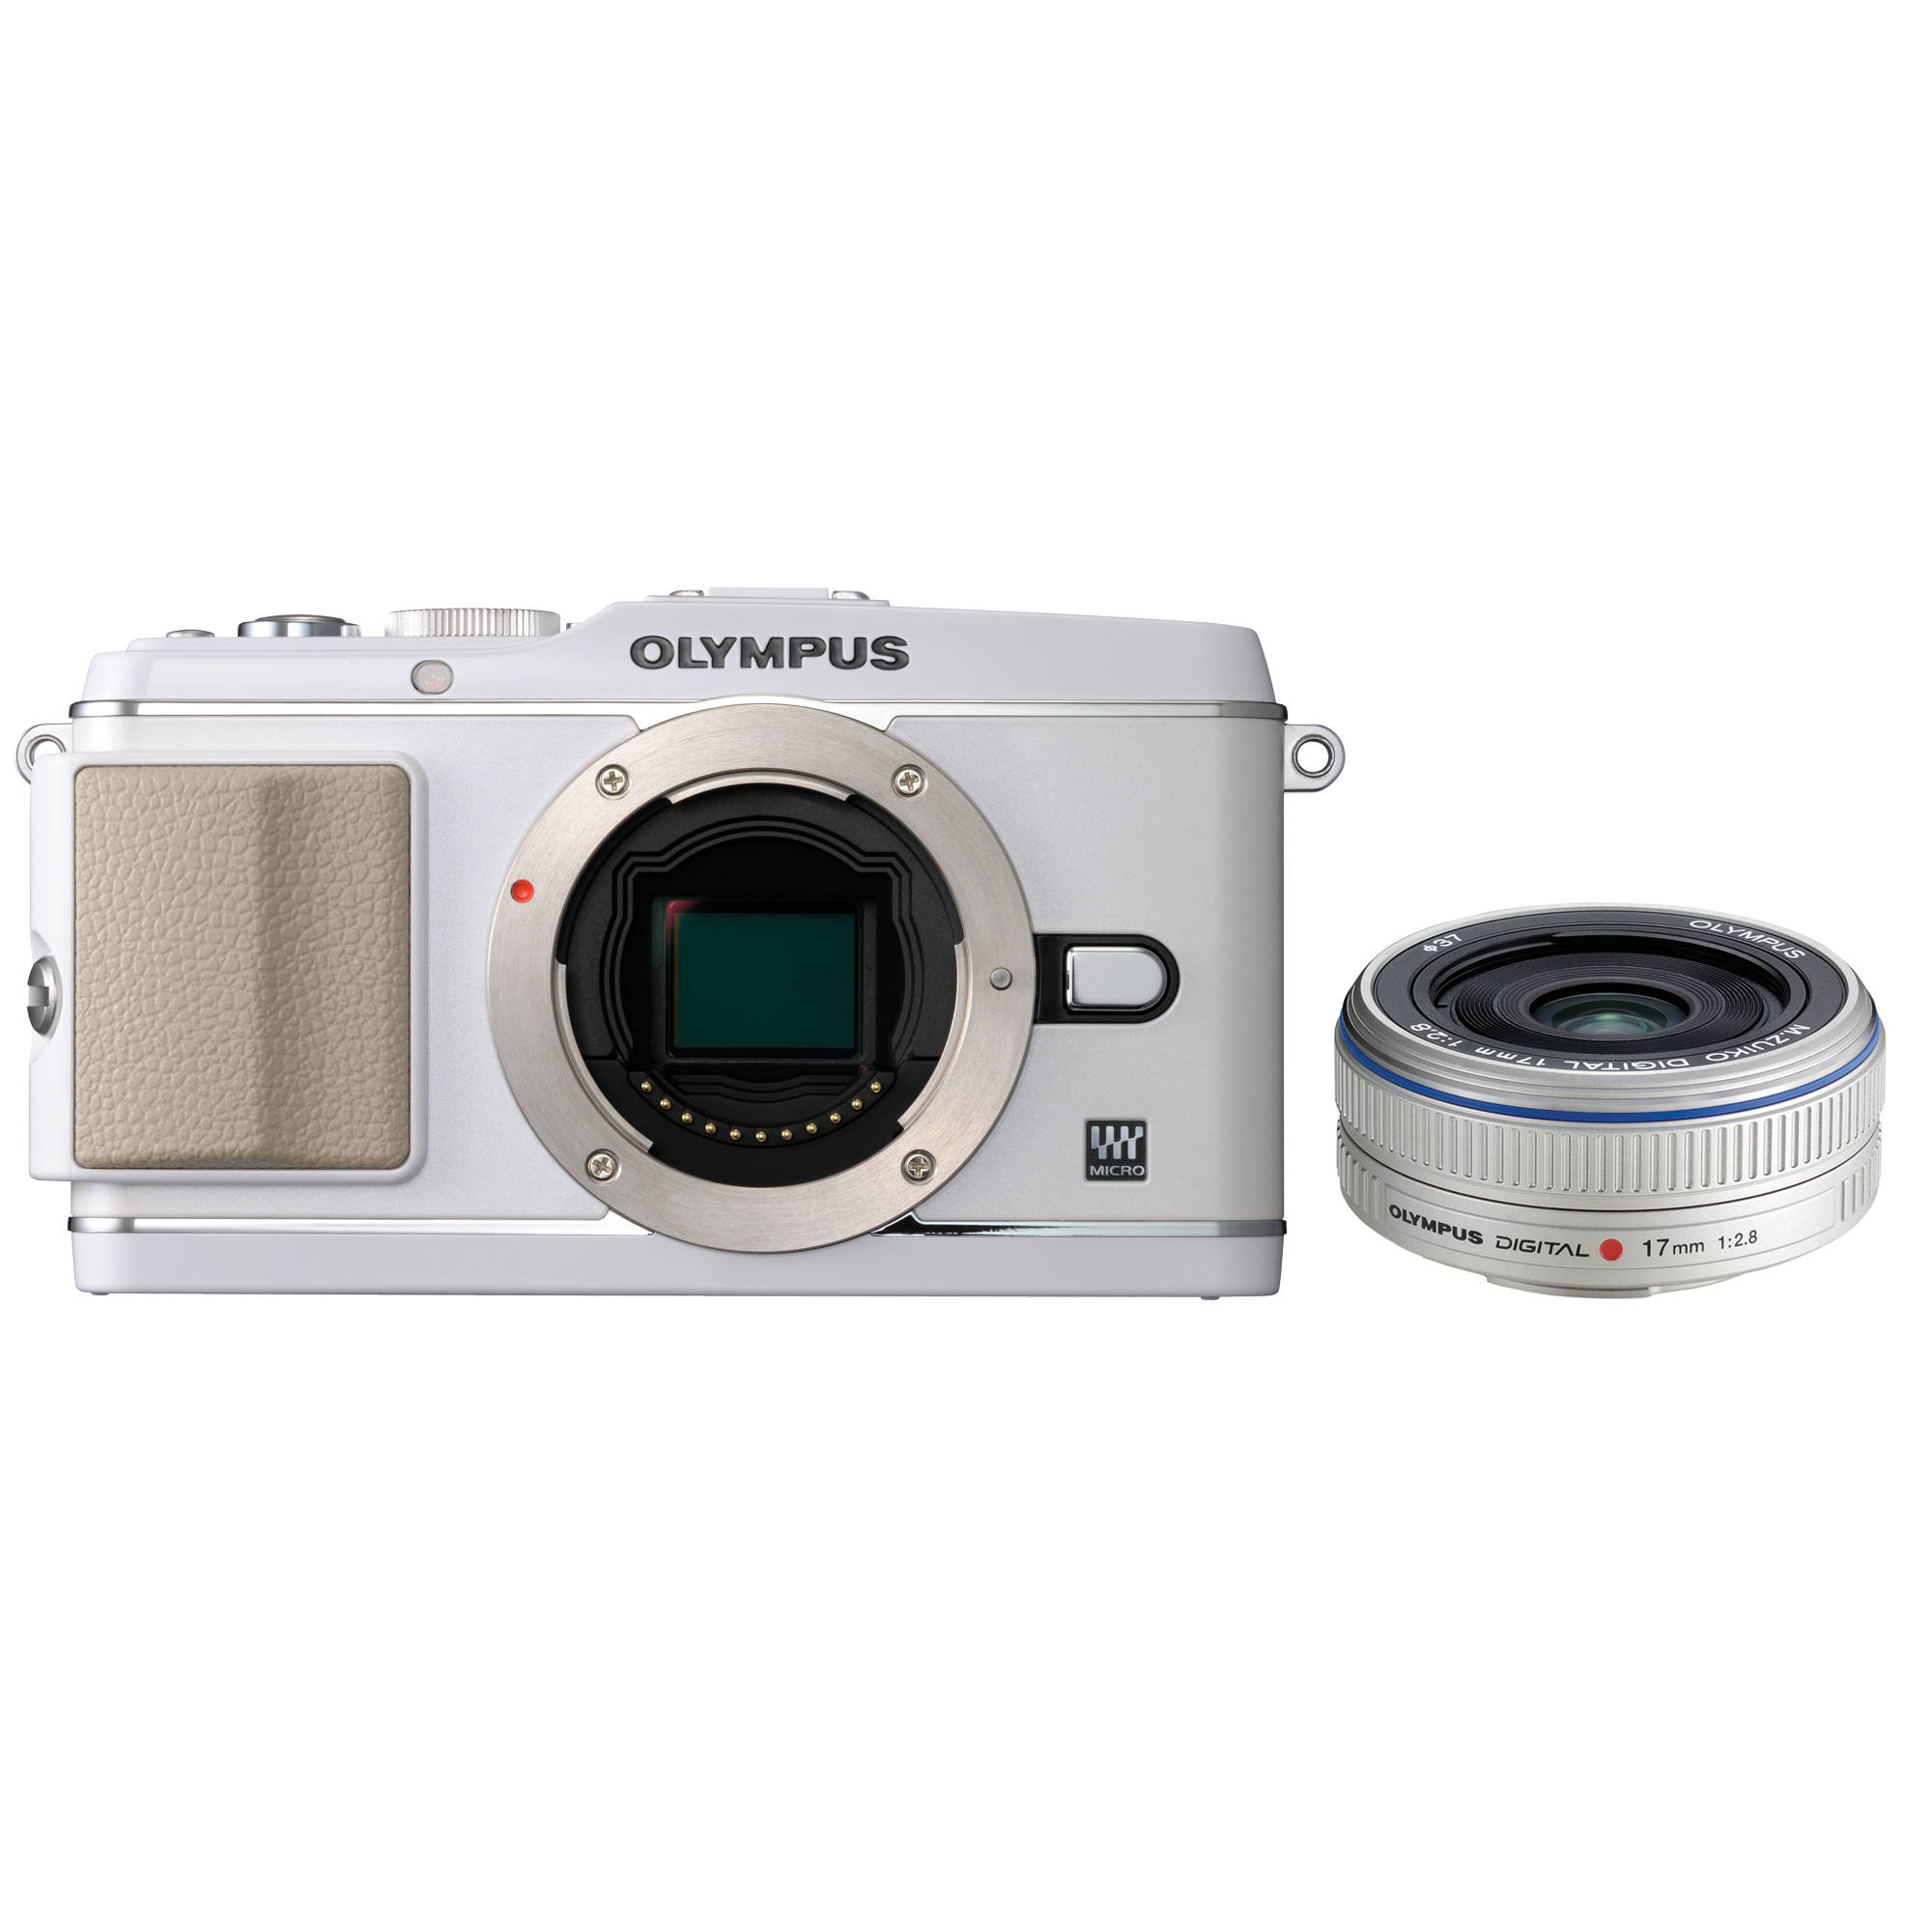 Olympus E P3 Pen Digital Camera With 17mm Lens V4033wu000 B H